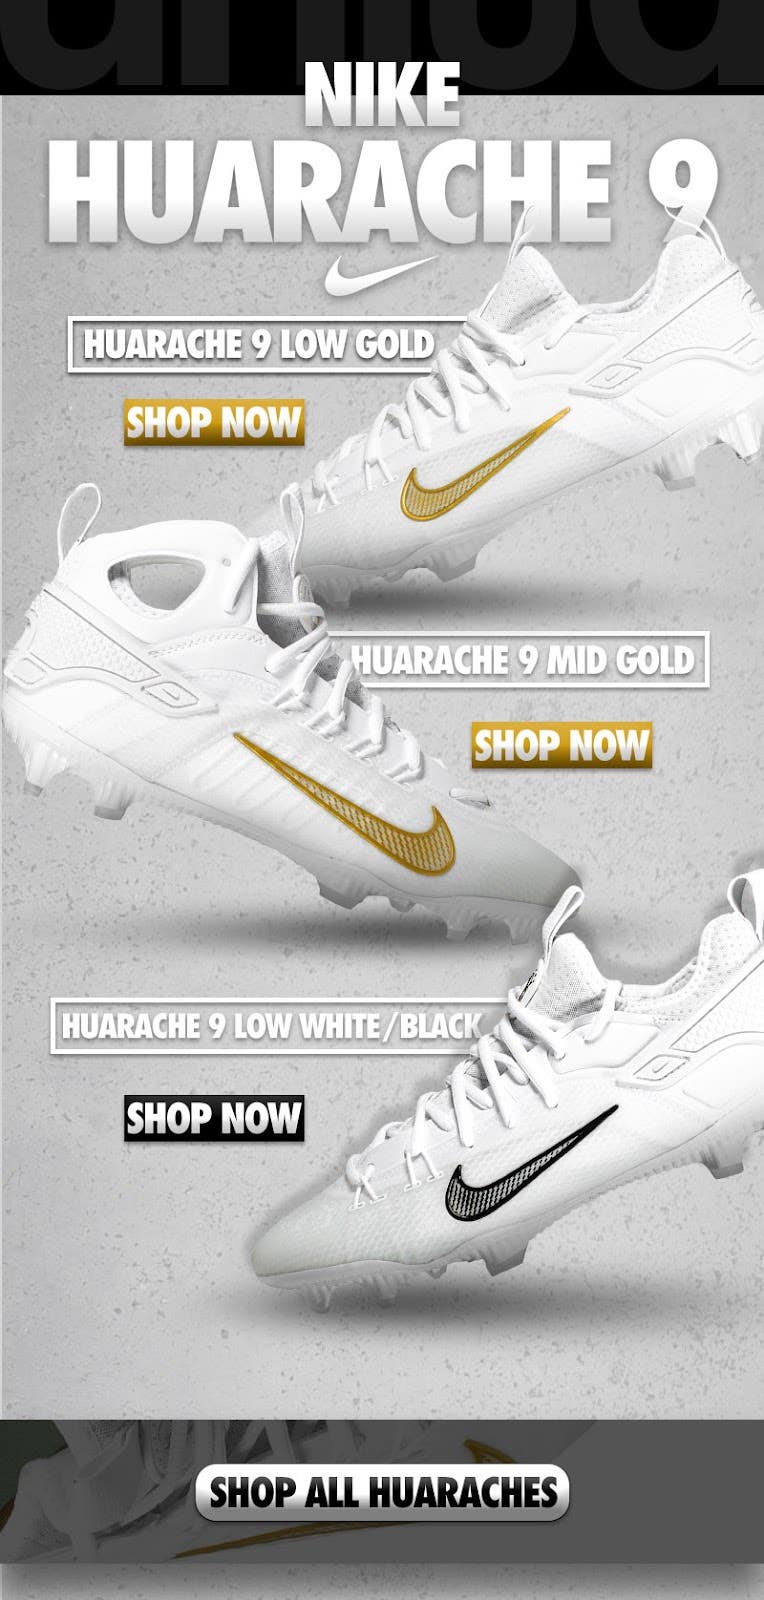 Nike Huarache 9 Lacrosse Cleats